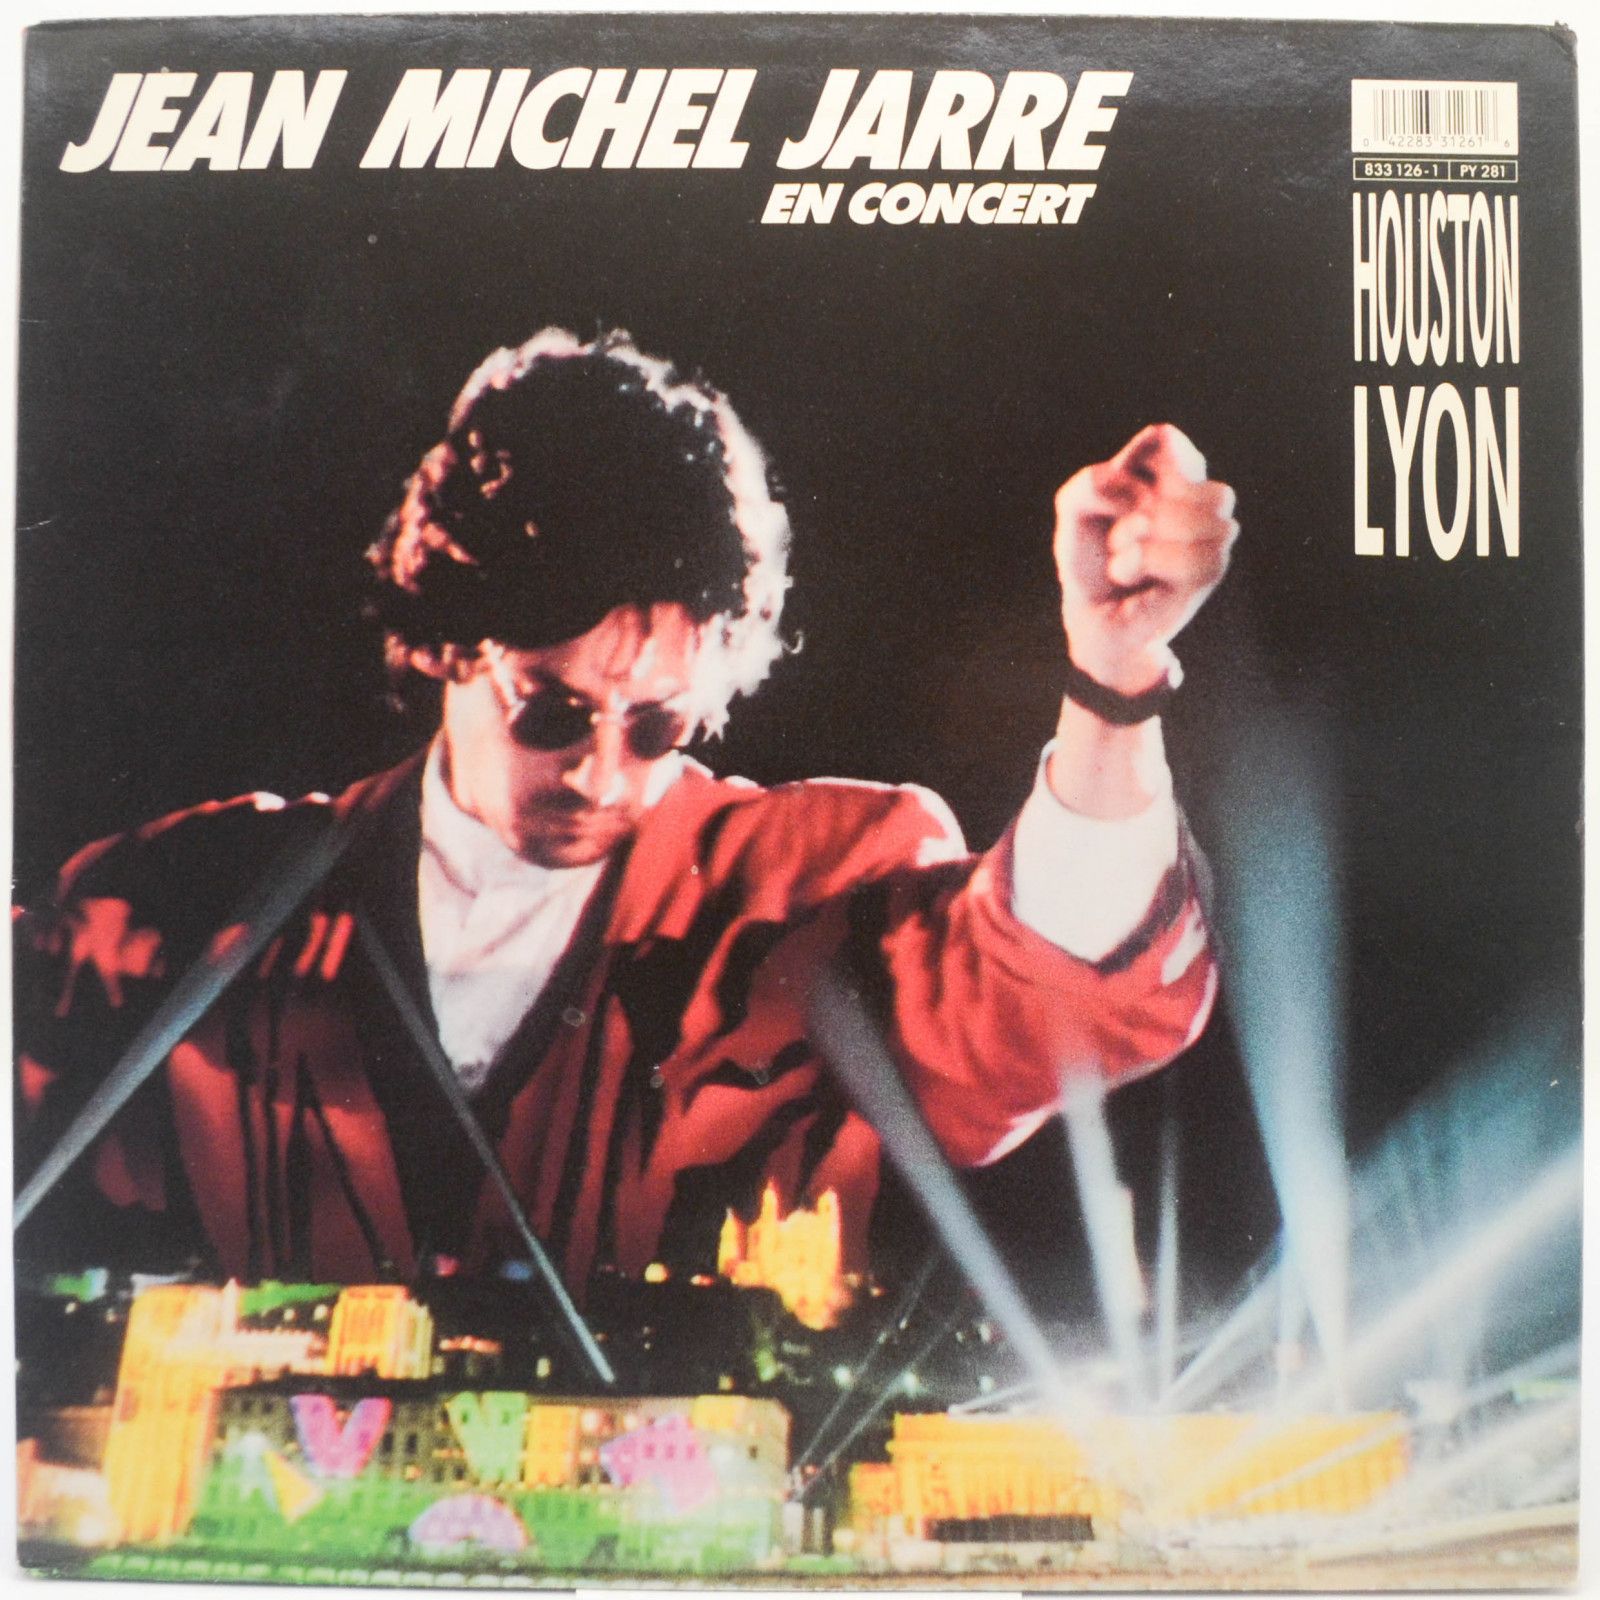 Jean Michel Jarre — En Concert Houston / Lyon (1-st, France), 1987